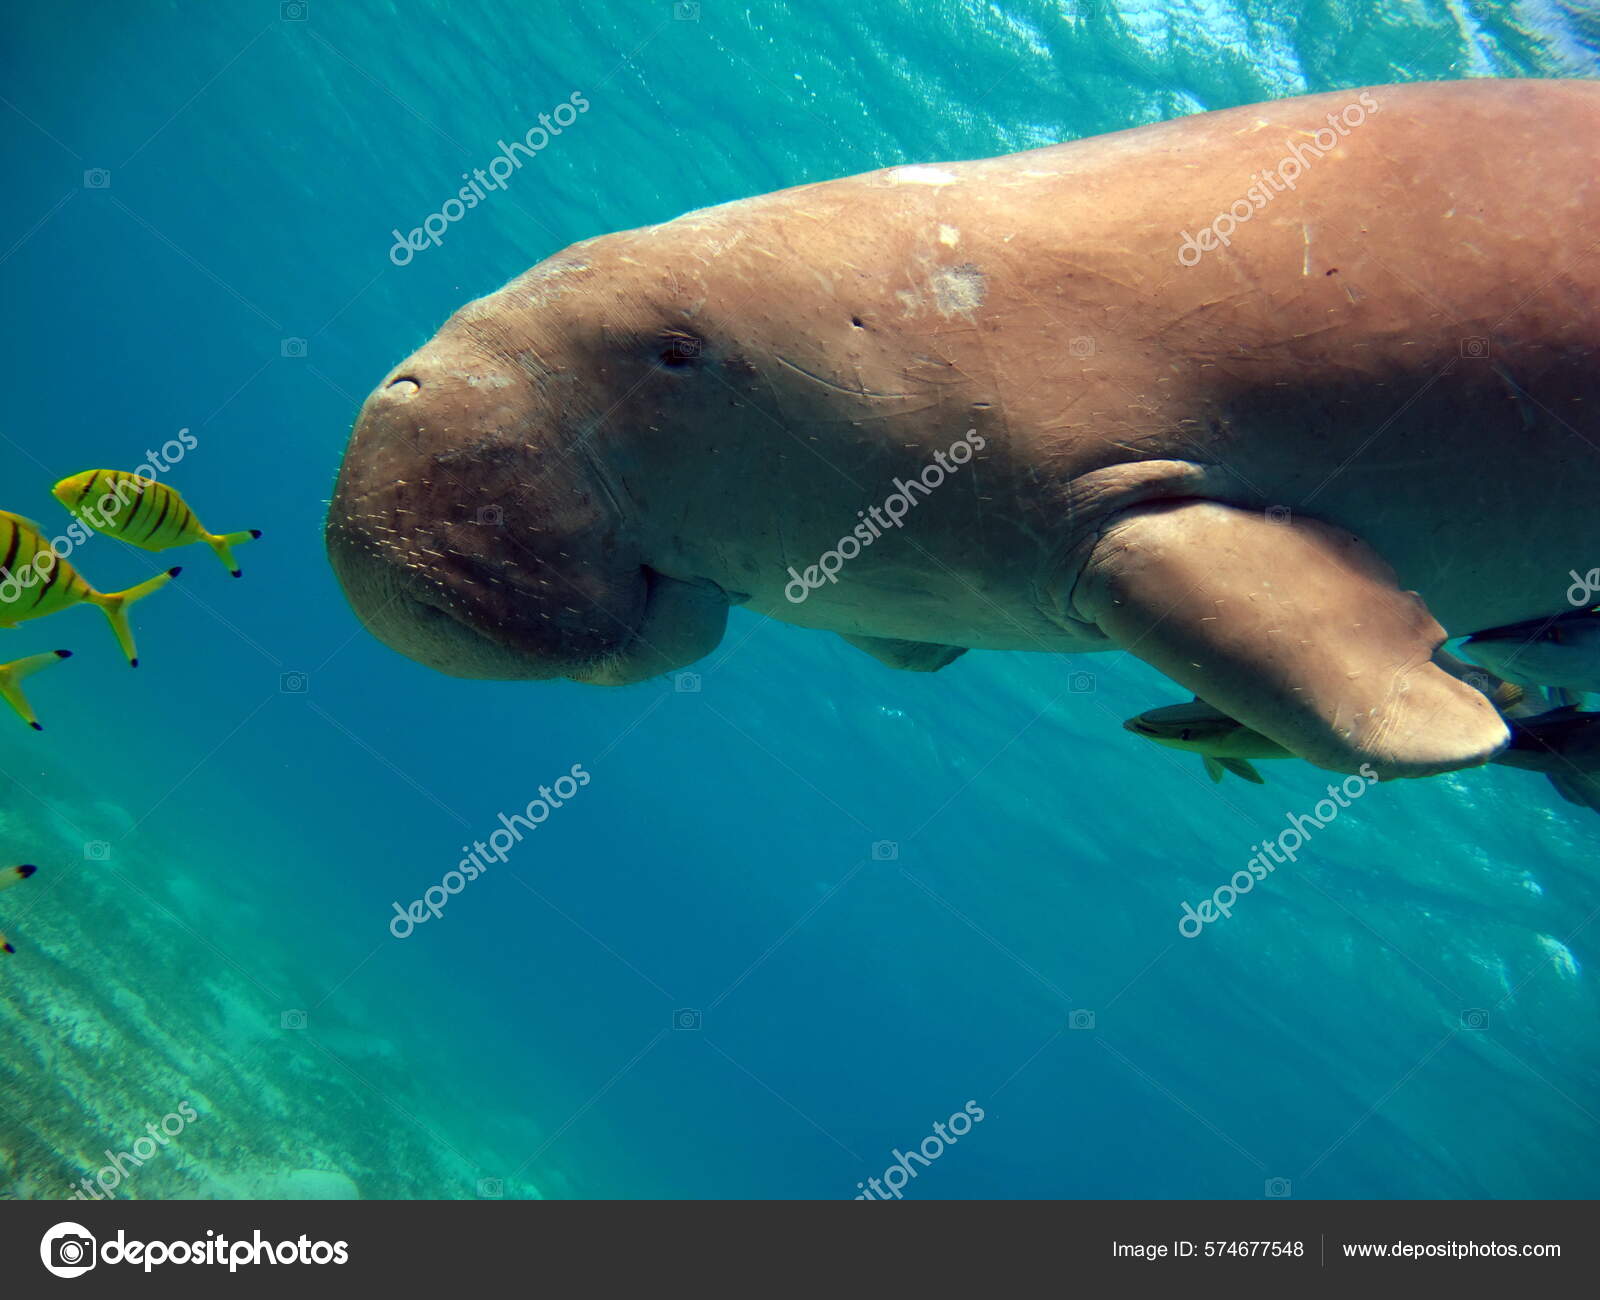 Baby dugong Stock Photos, Royalty Free Baby dugong Images | Depositphotos